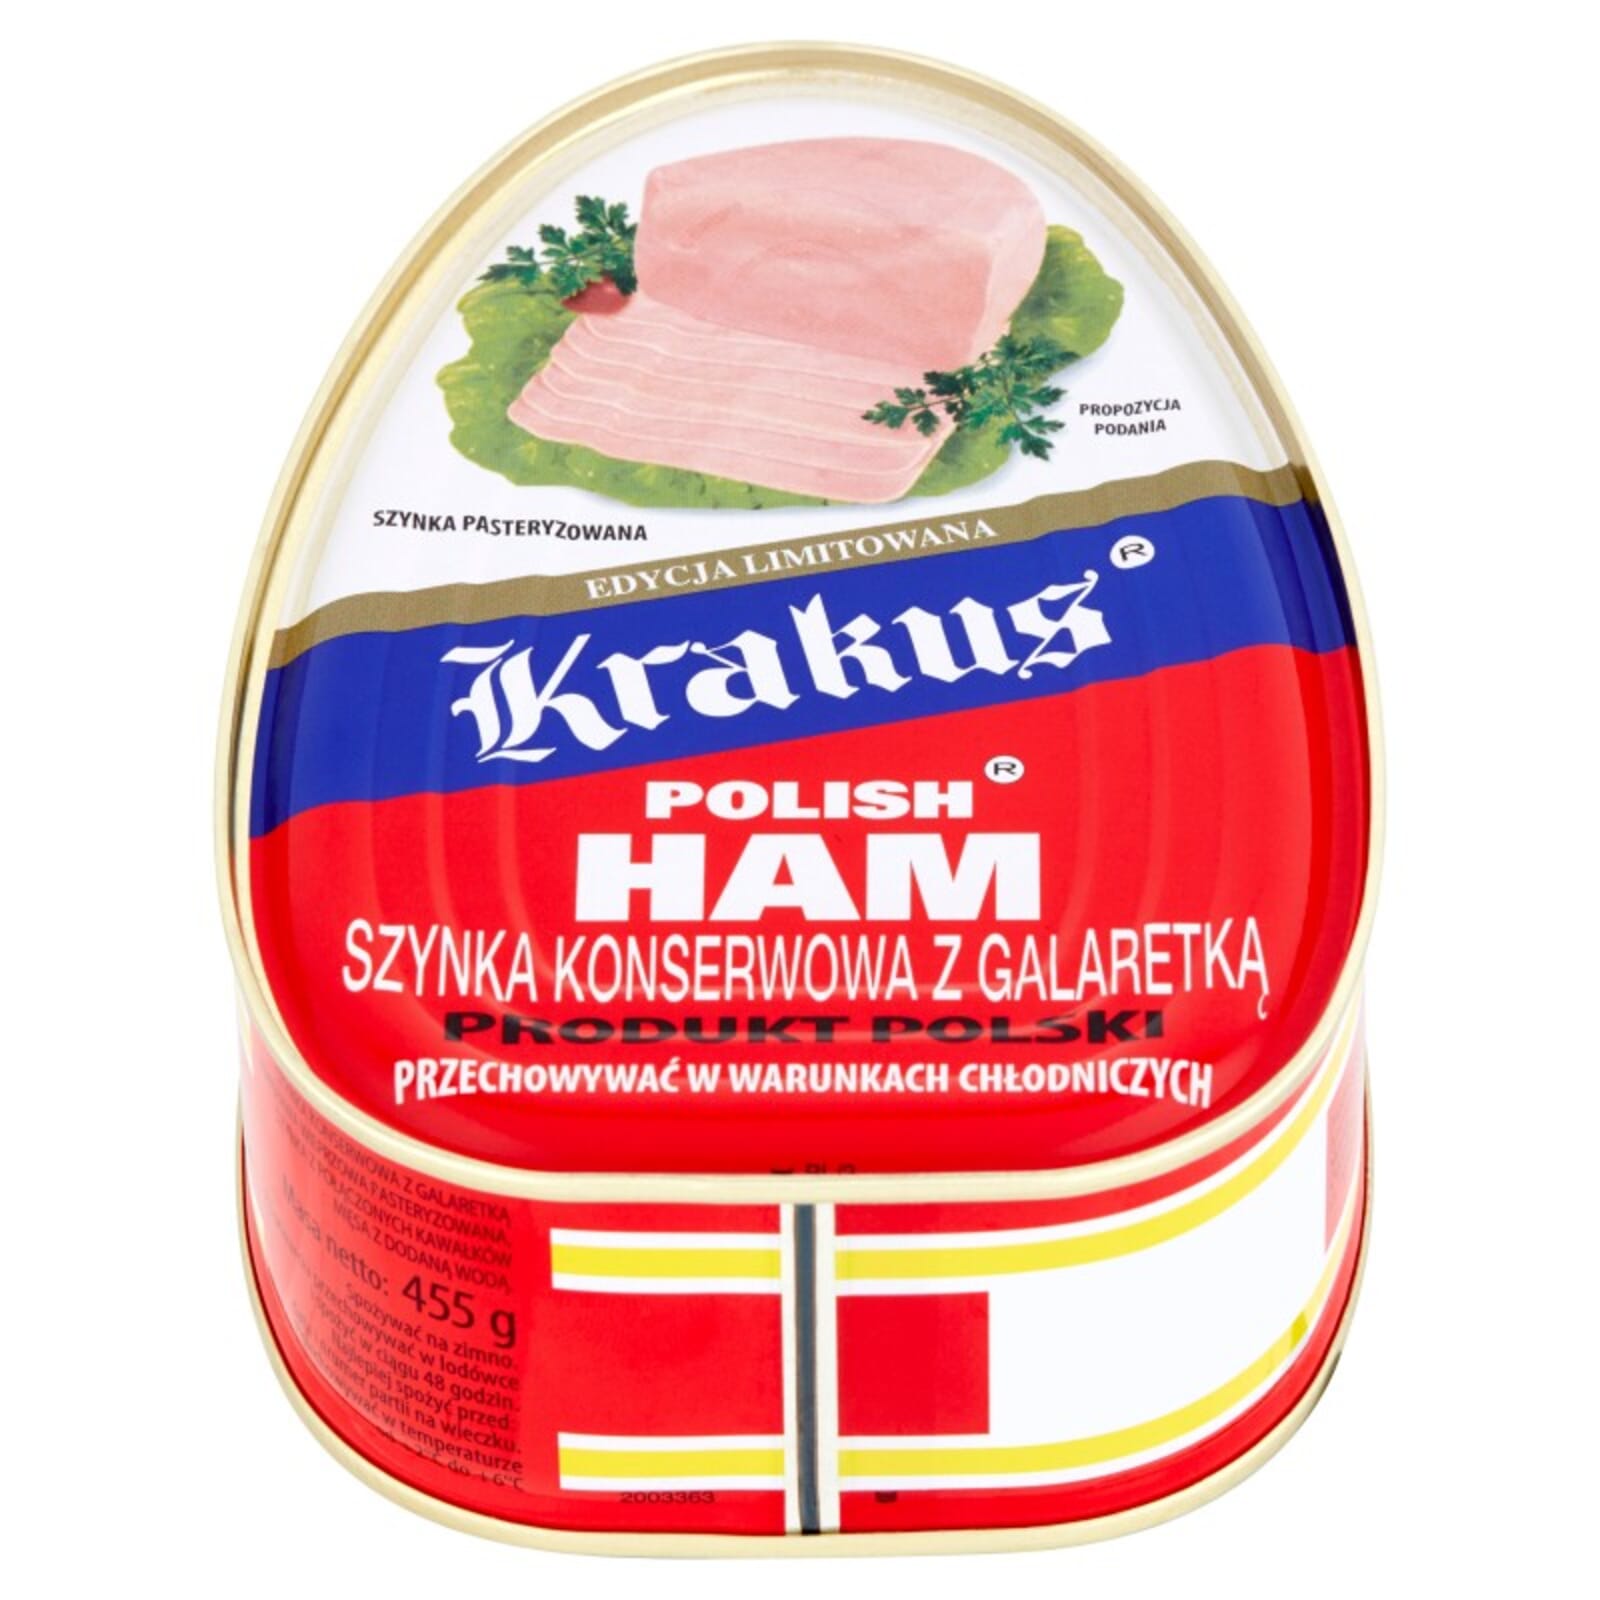 canned-ham-with-jelly-krakus-455g.jpg